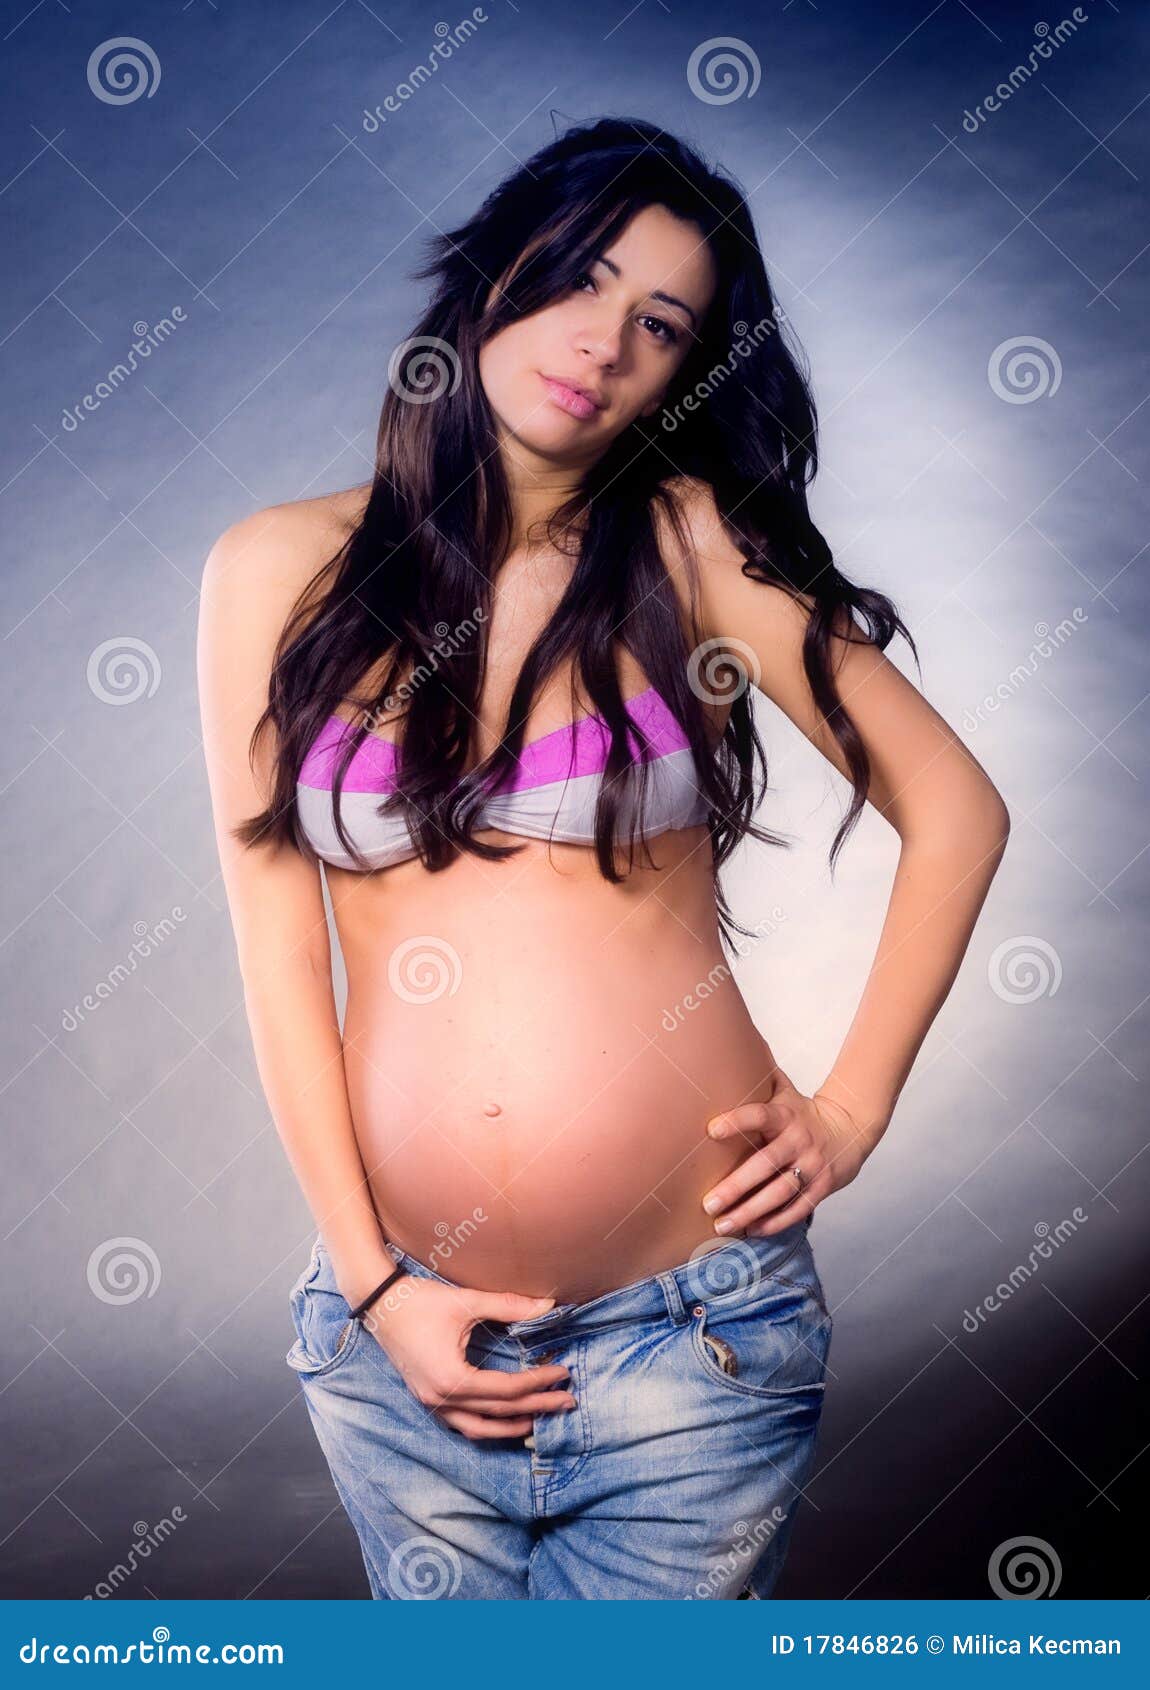 Ftv girls pregnant